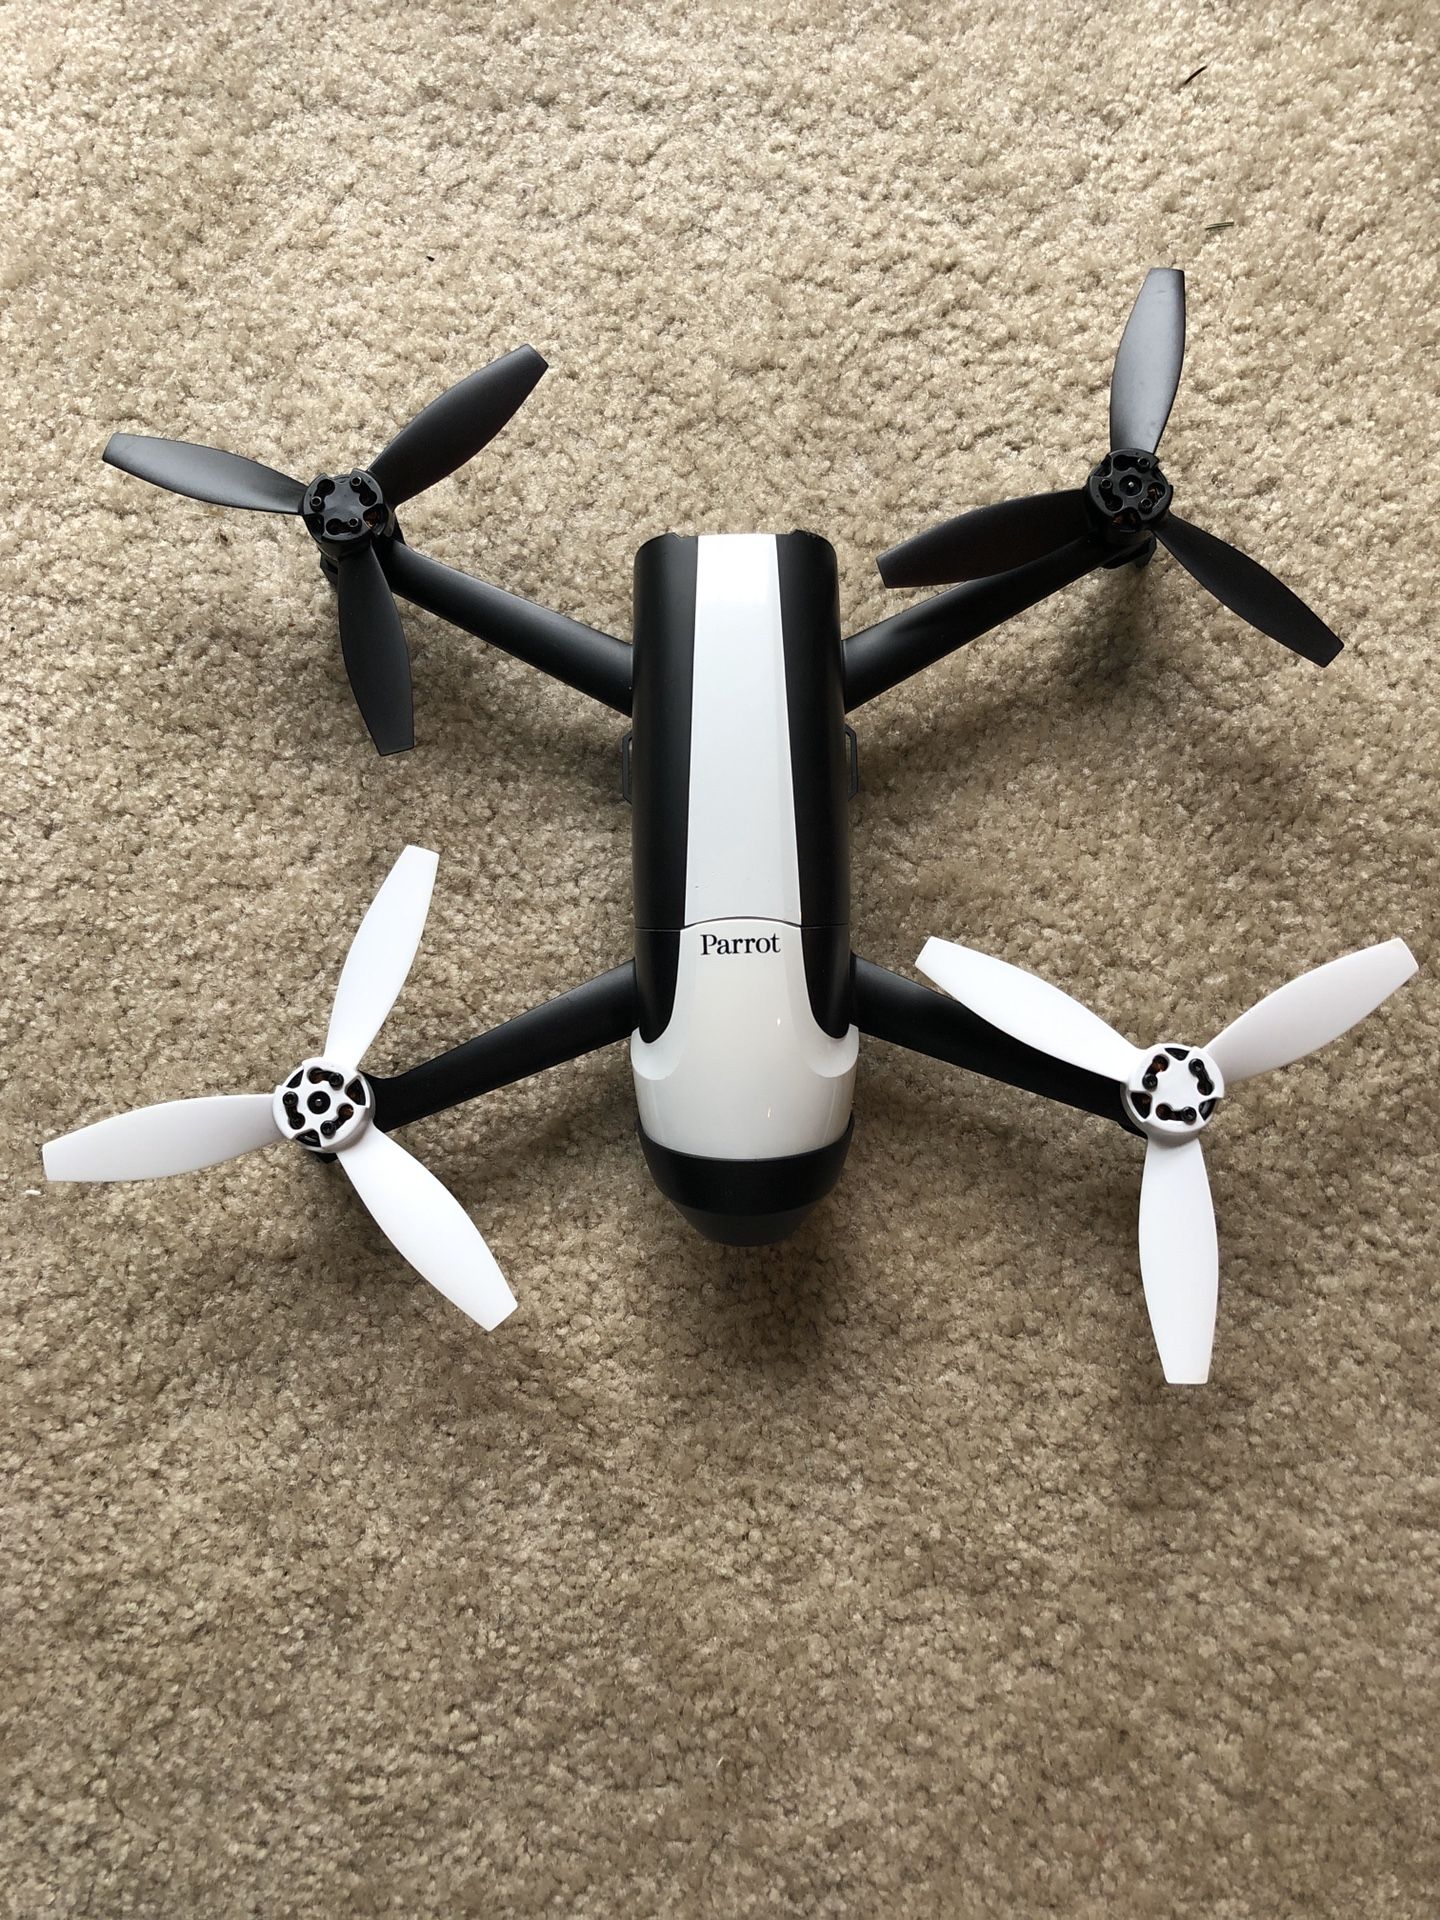 Parrot Bebop 2 FPV VR Drone Kit